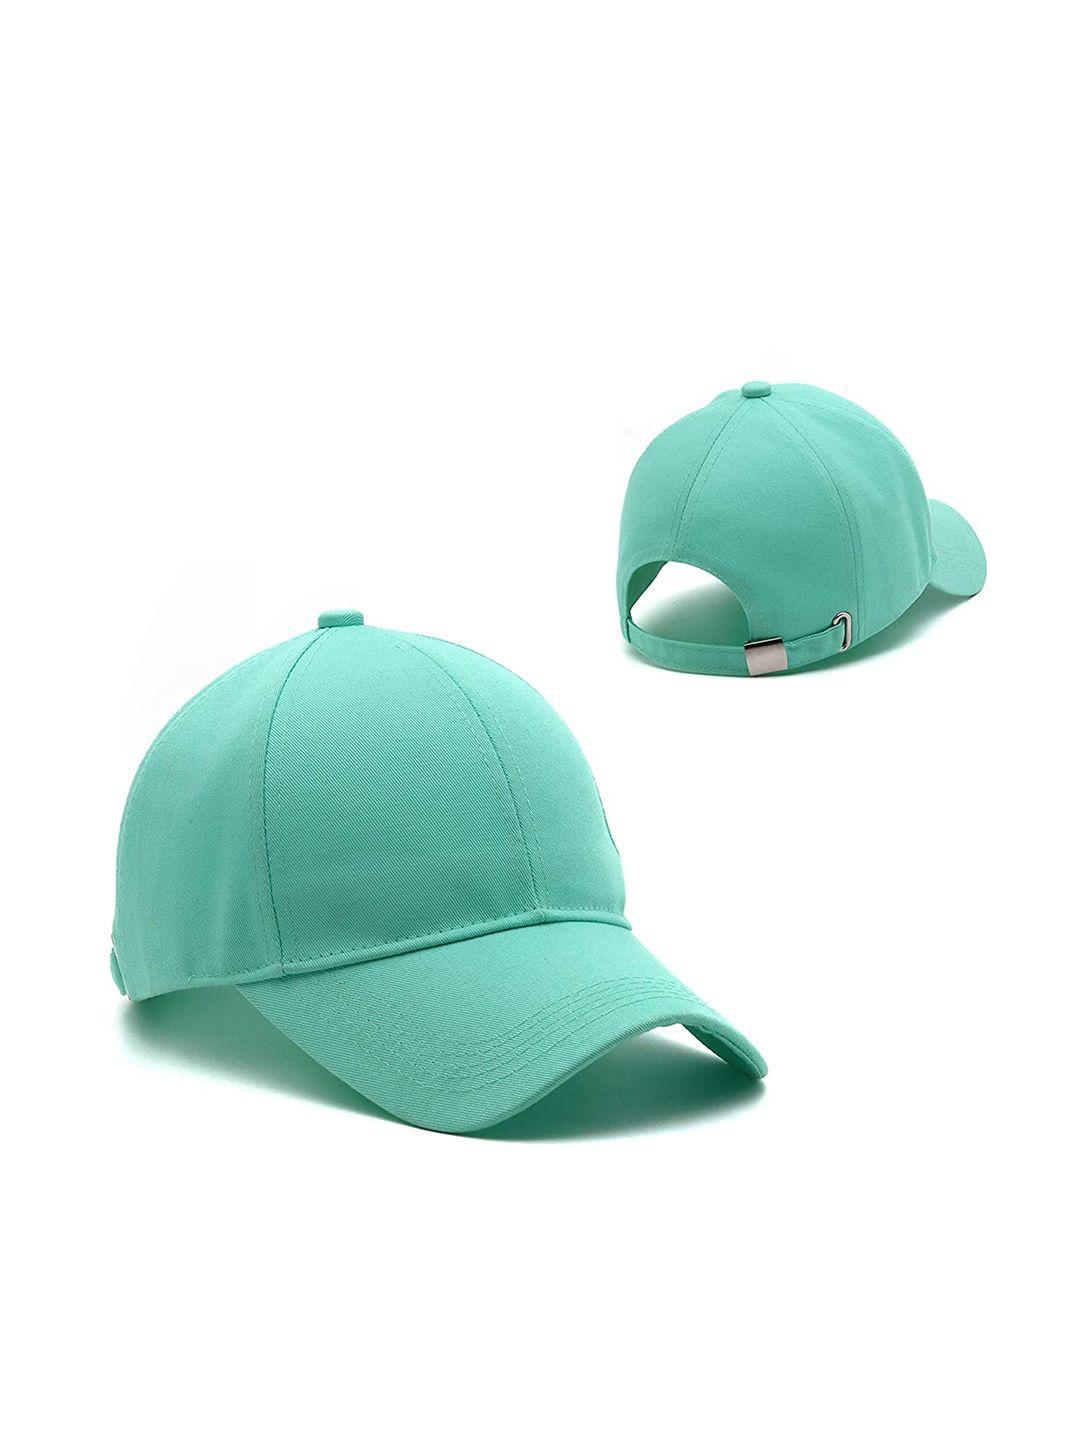 zacharias unisex green baseball cap